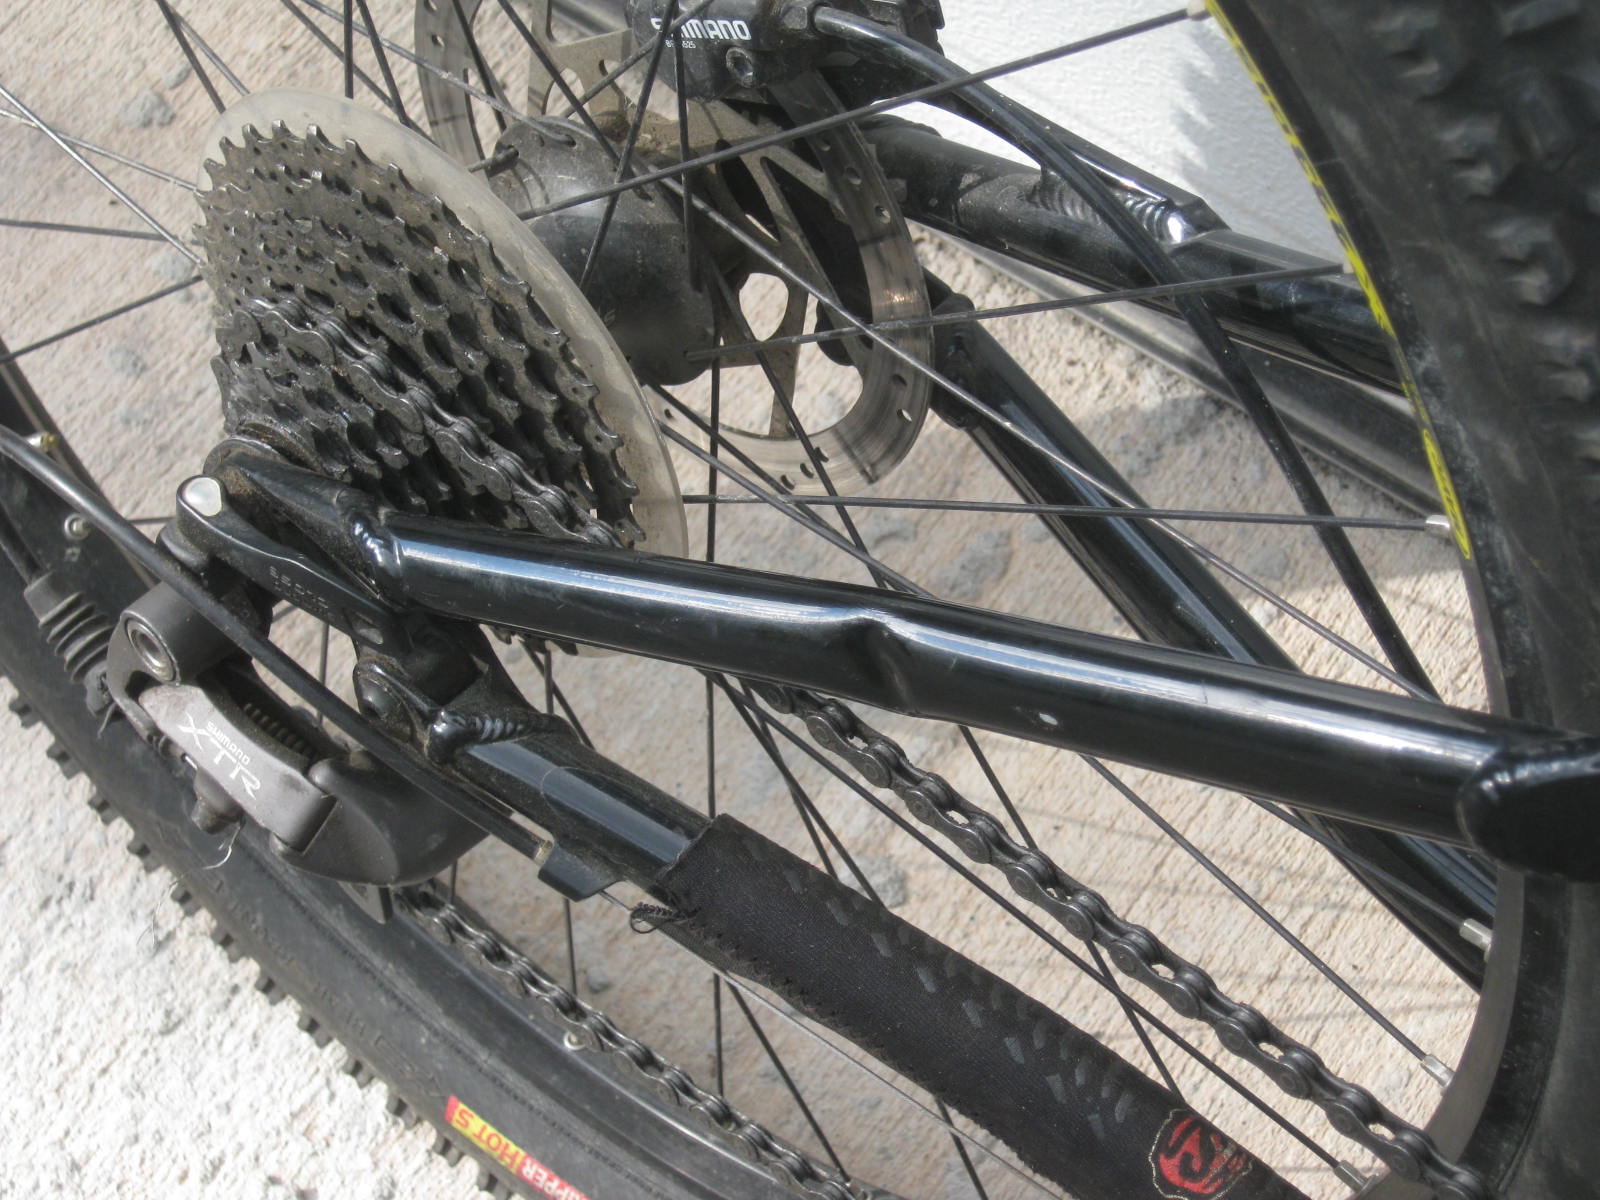 02 Specialized Enduro Expert FSR Mountain Bike +Upgrade 13